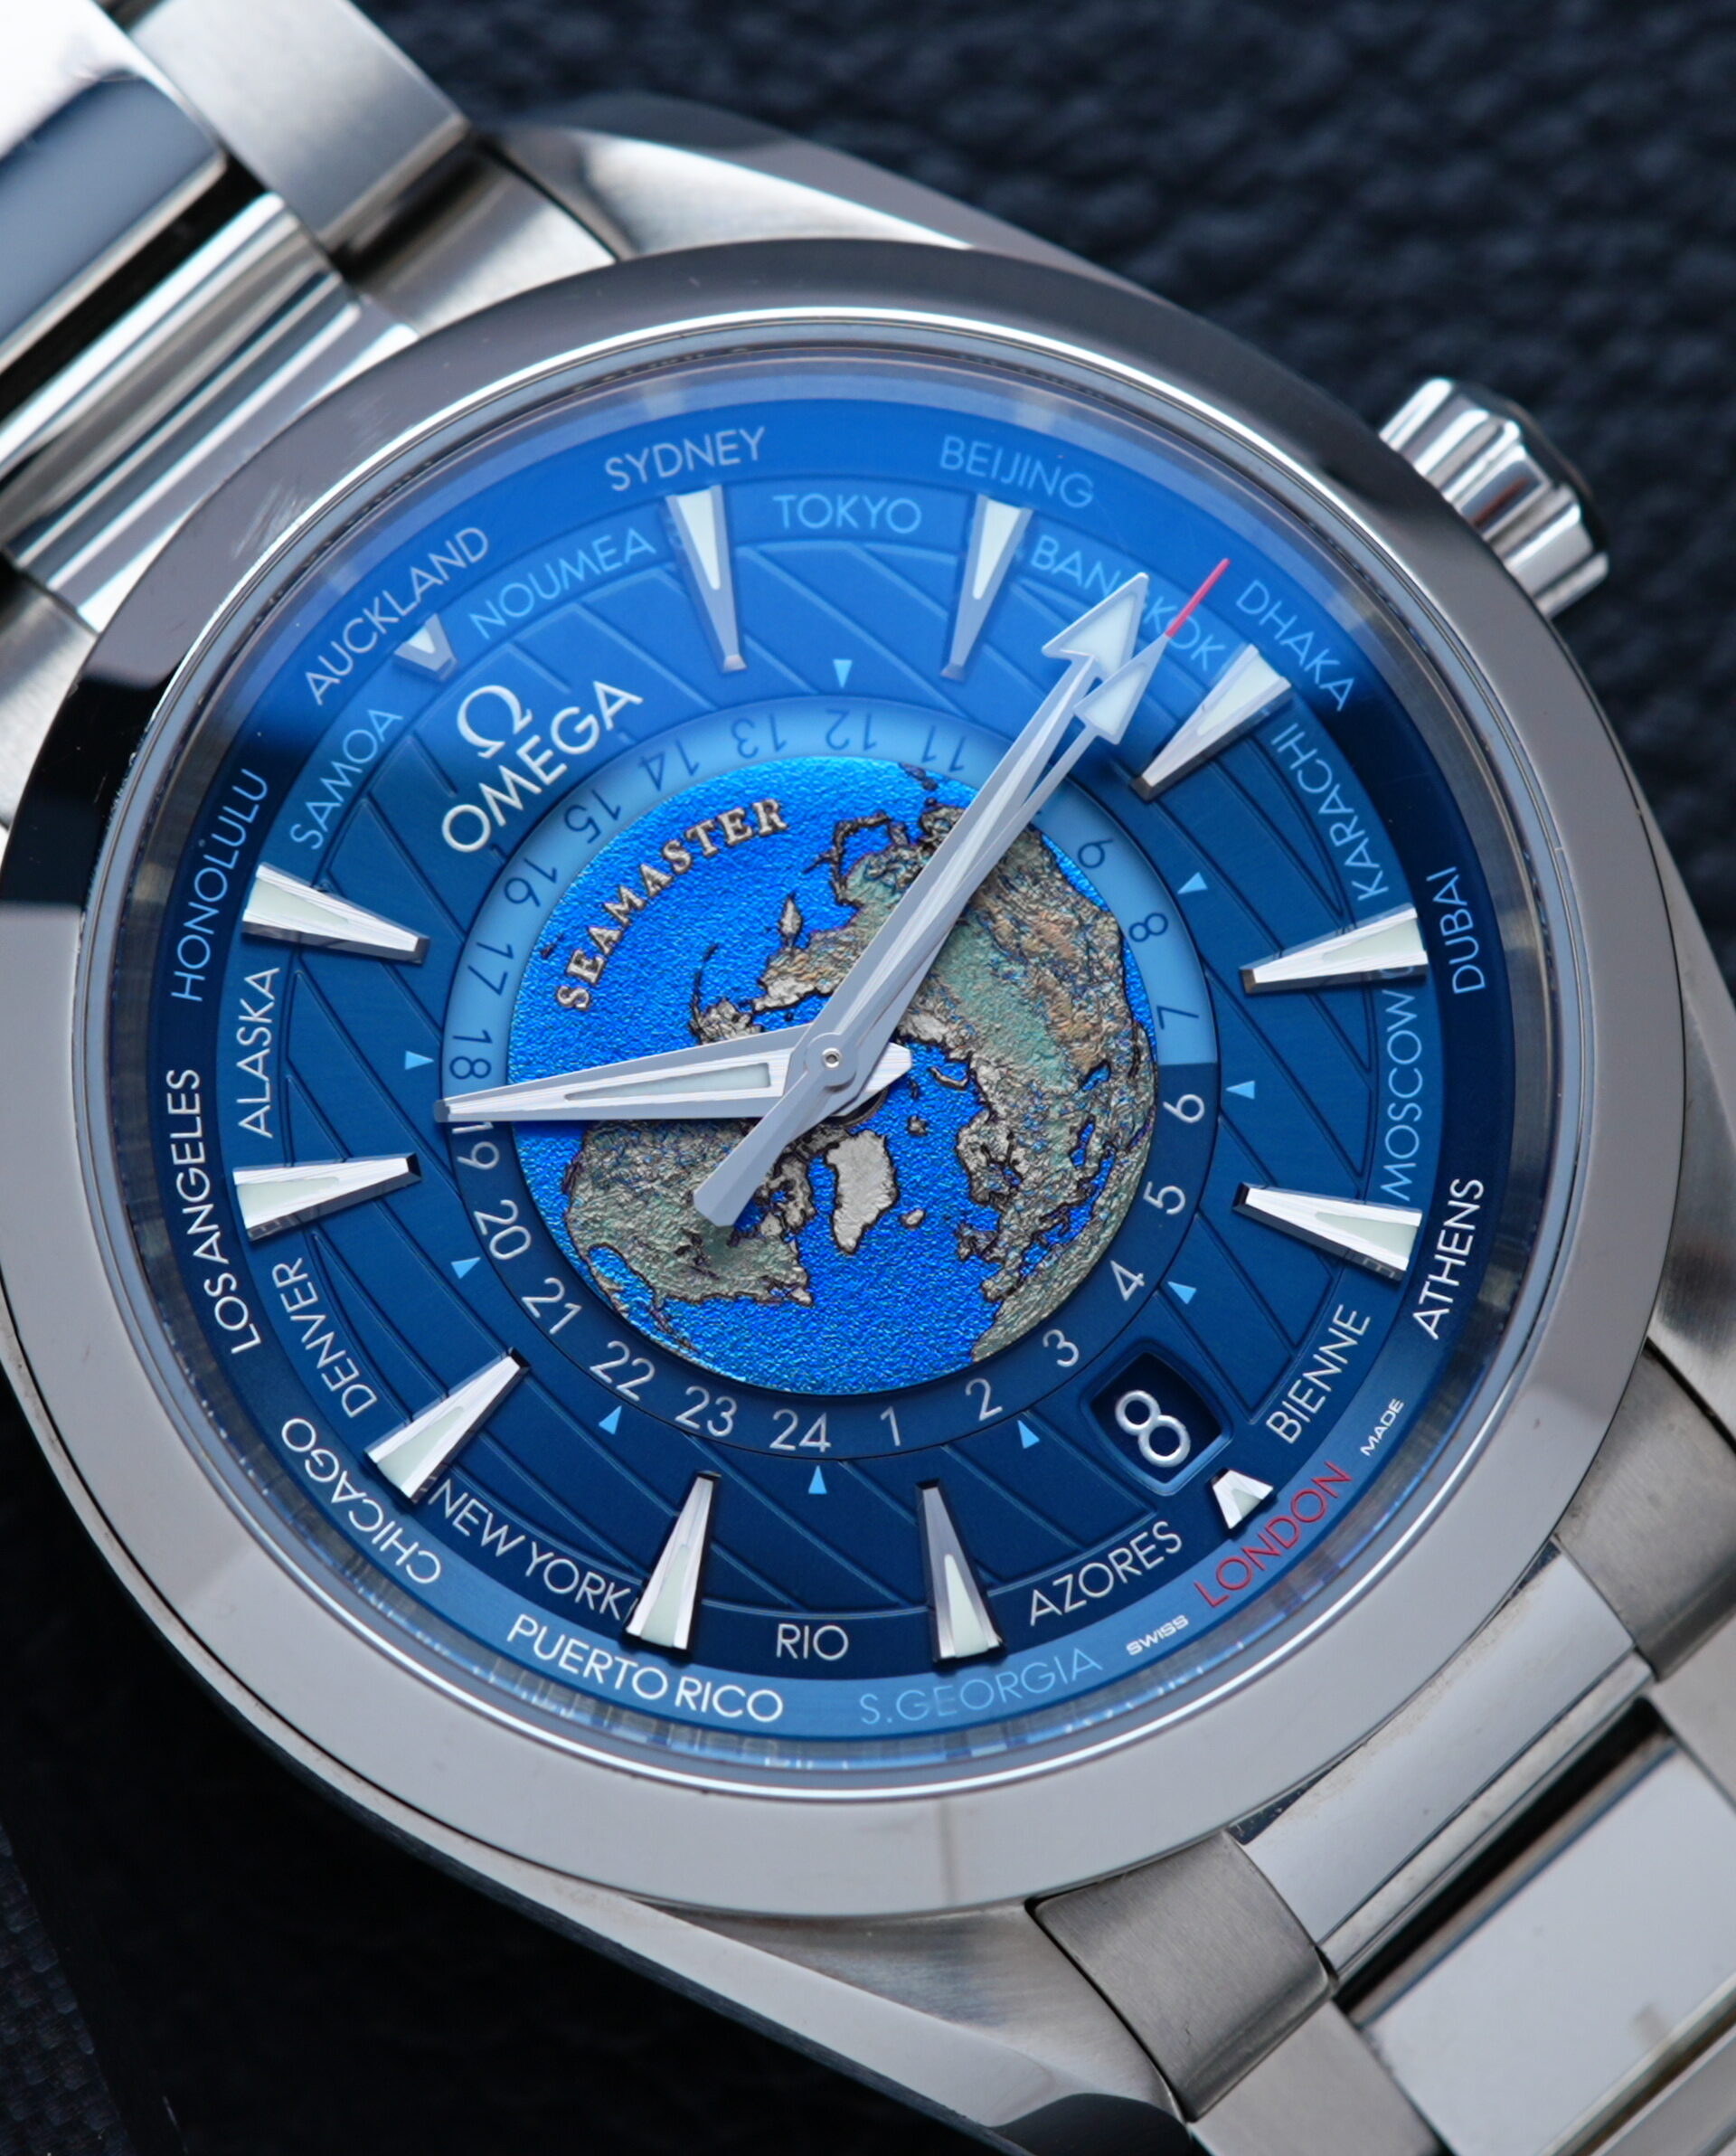 Closeup magazine style image of the Omega Seamaster Aqua Terra 220.10.43.22.03.001 watch.